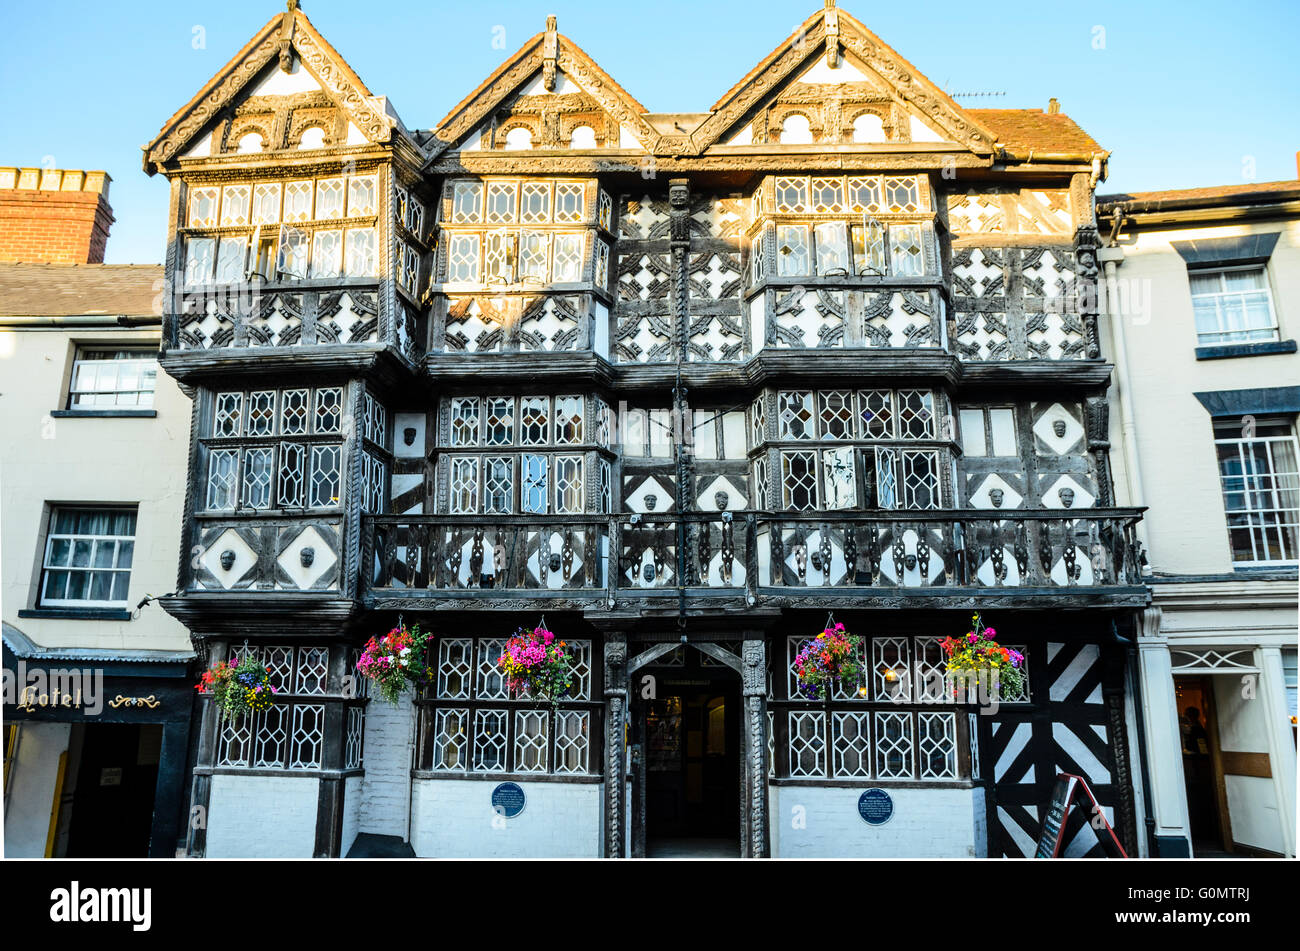 Les plumes un half-timbered inn Ludlow Shropshire en Angleterre Banque D'Images